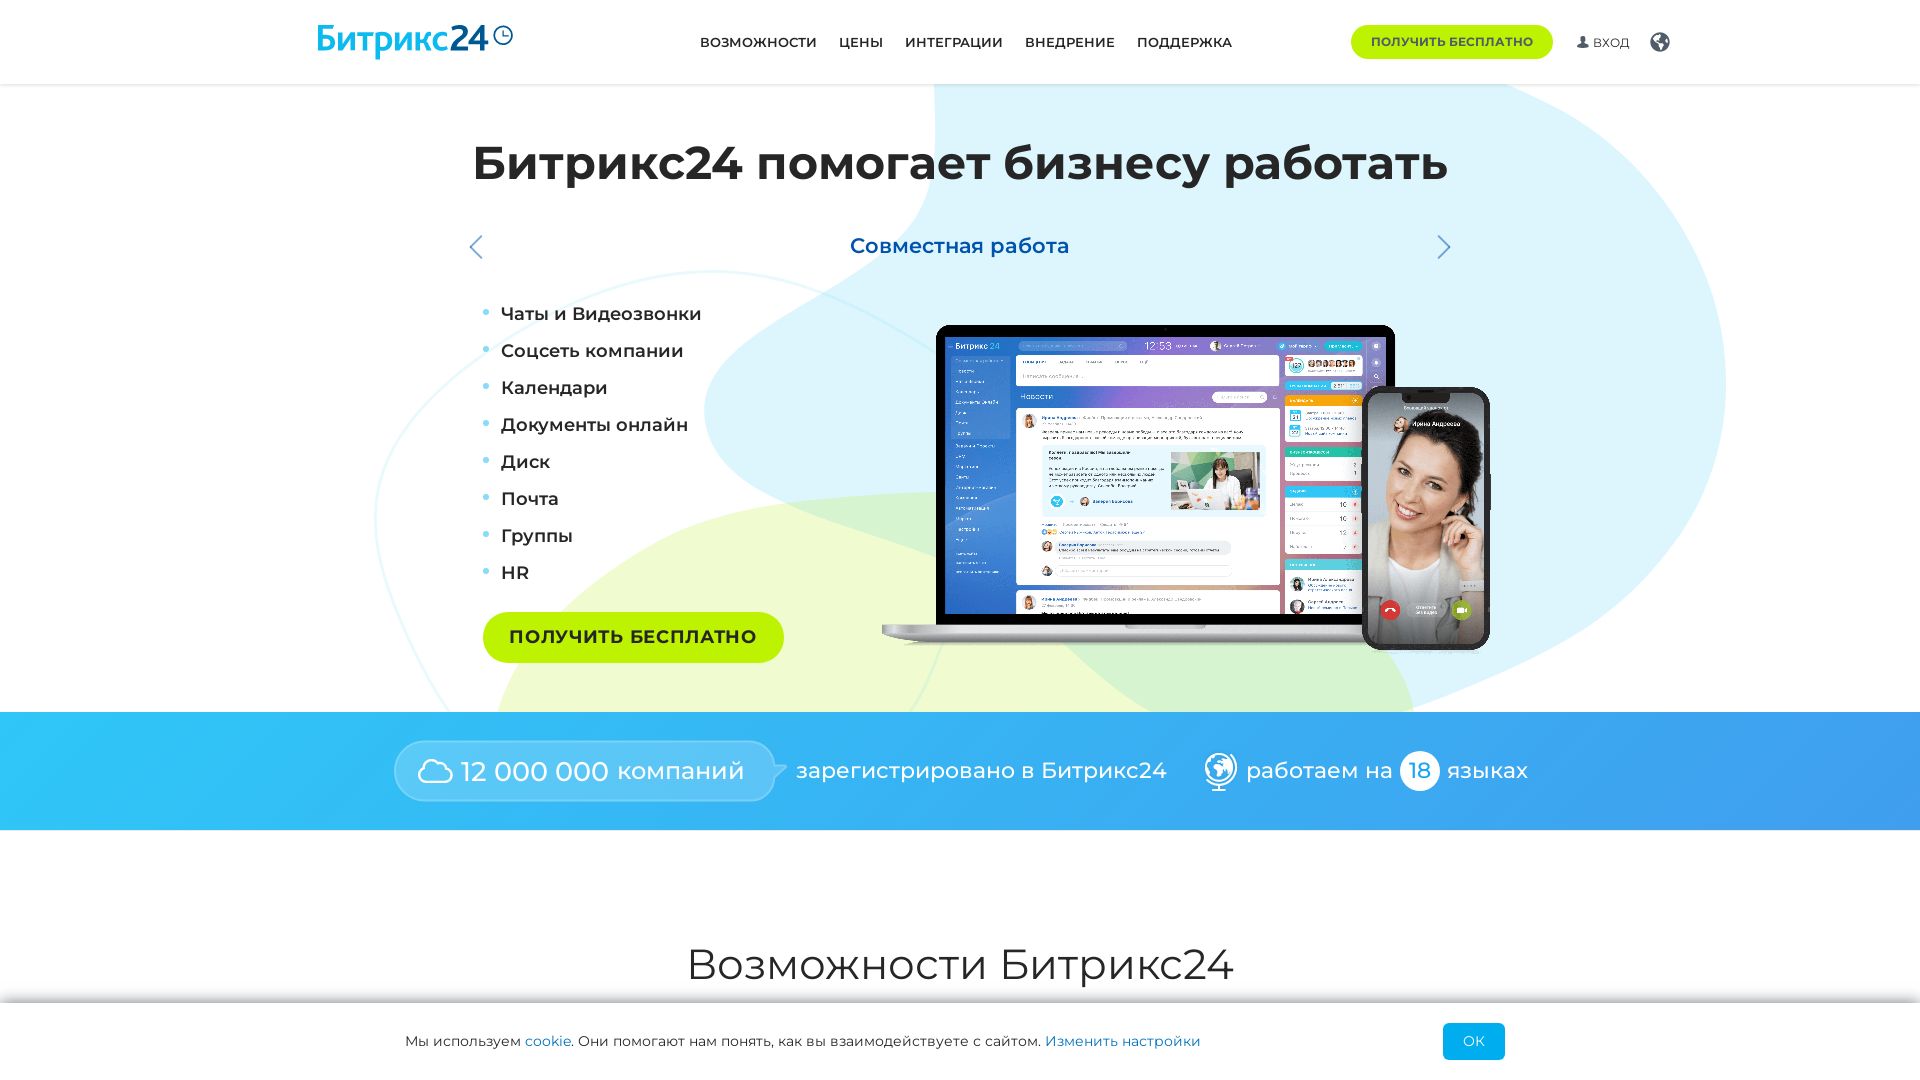 вебсайт bitrix24.ru Є   ONLINE